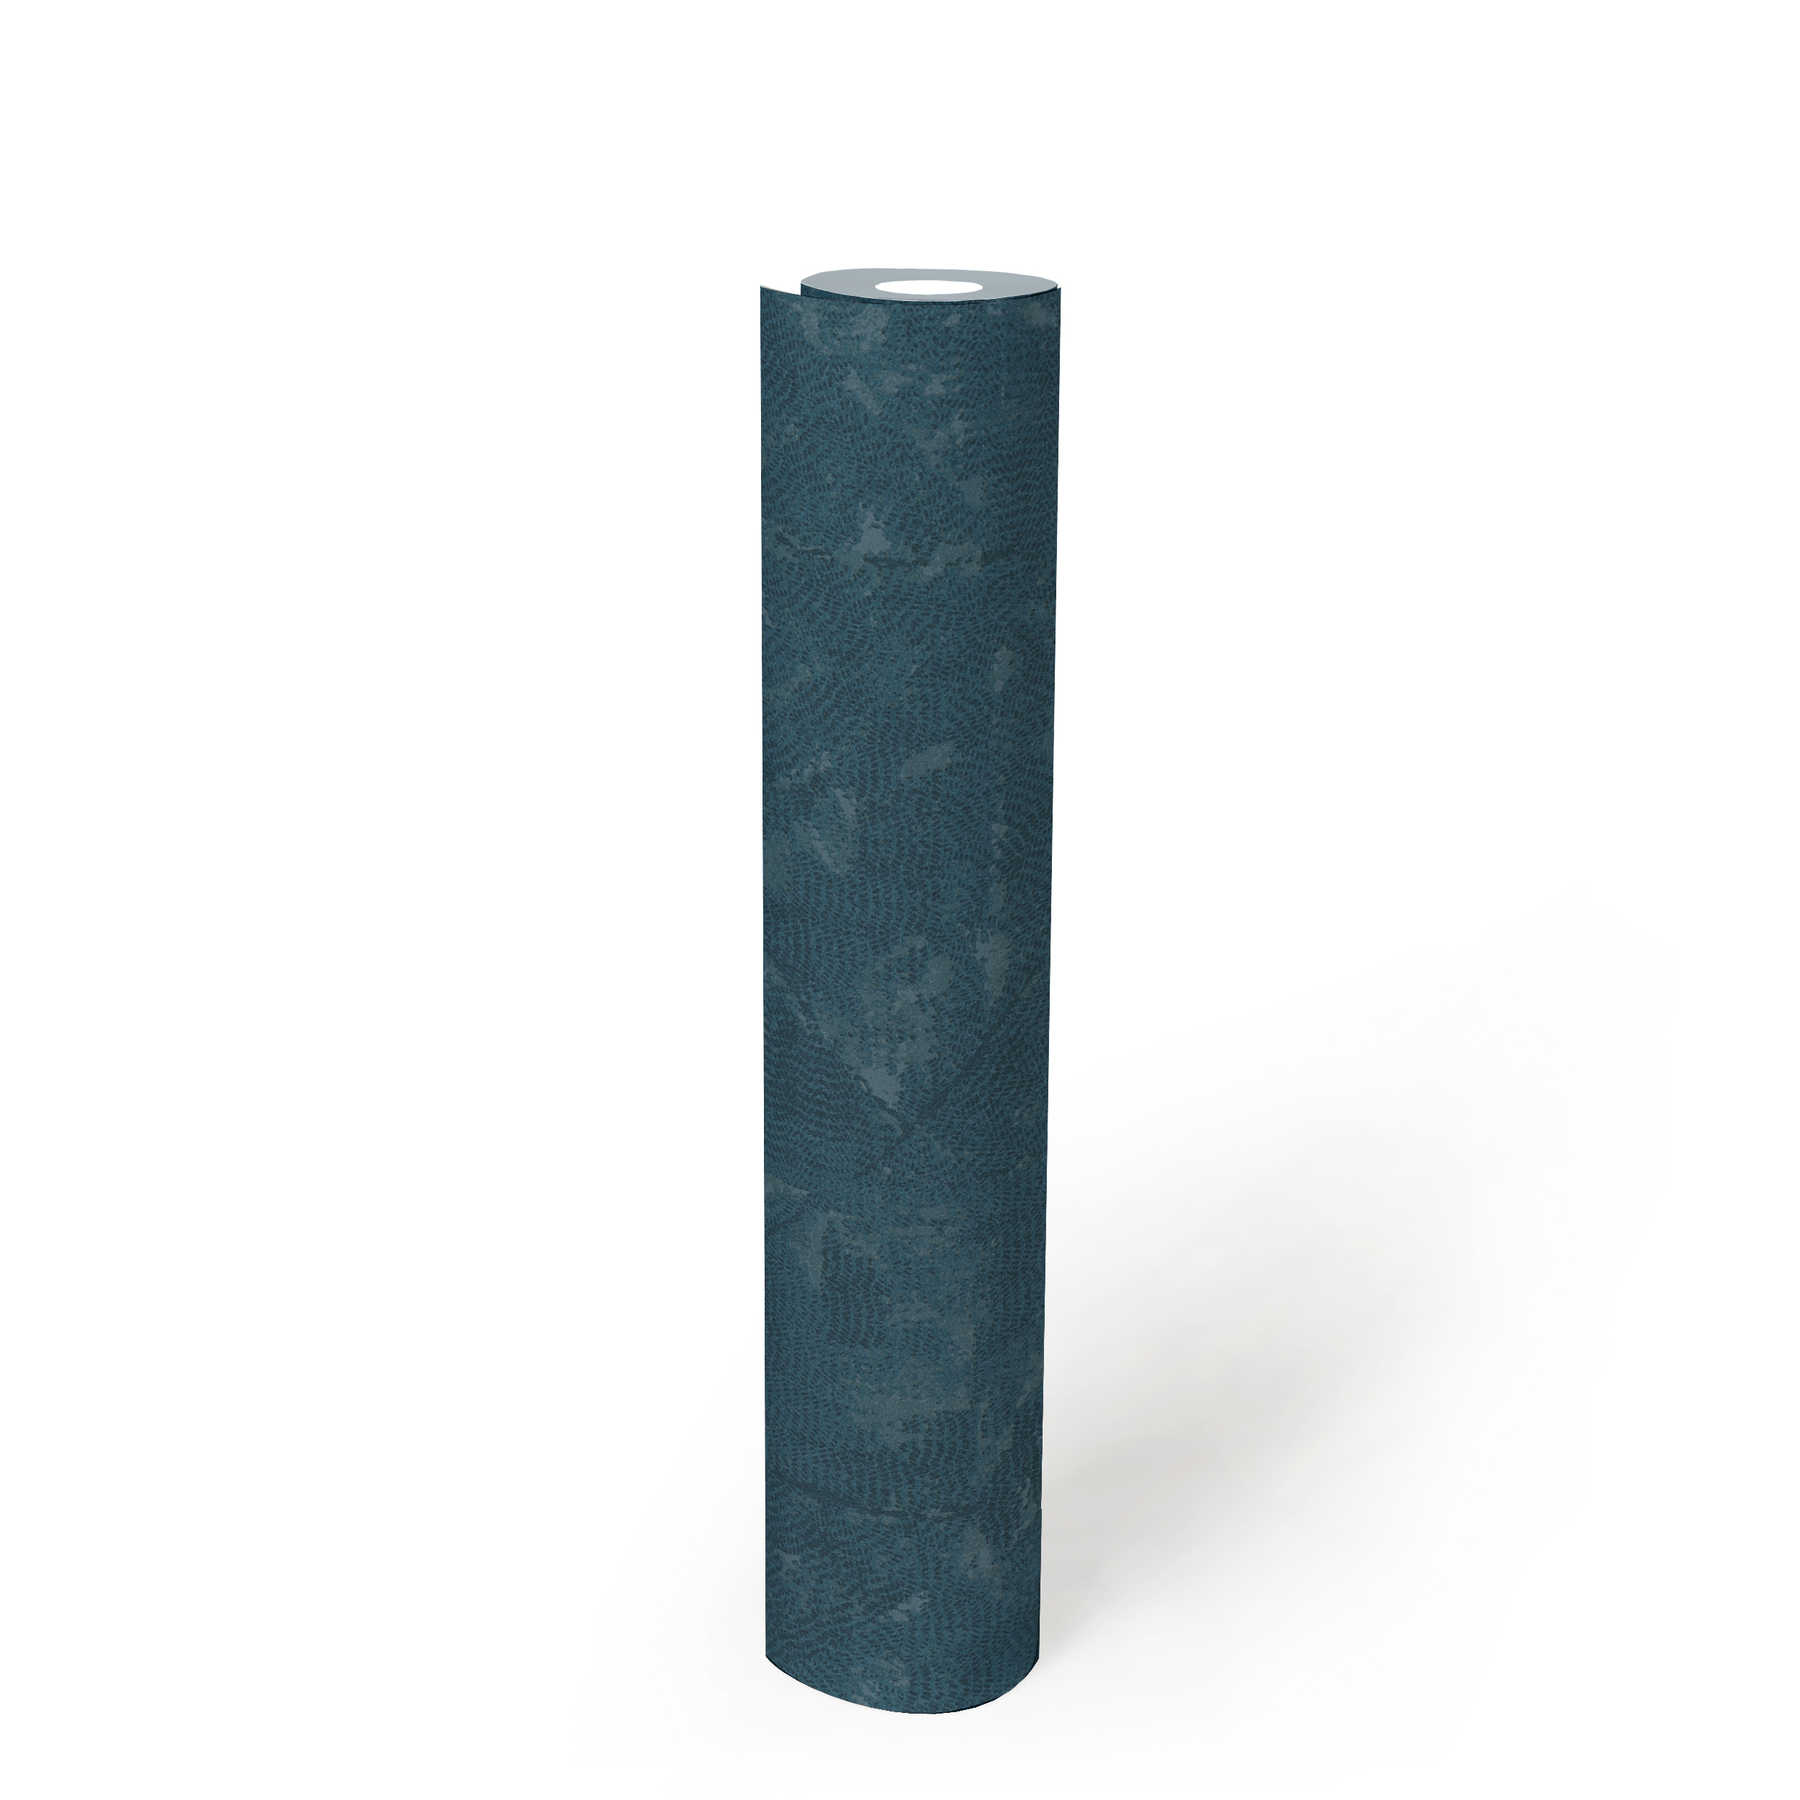             Petrolfarbene Vliestapete asymmetrische Details – Blau, Grau
        